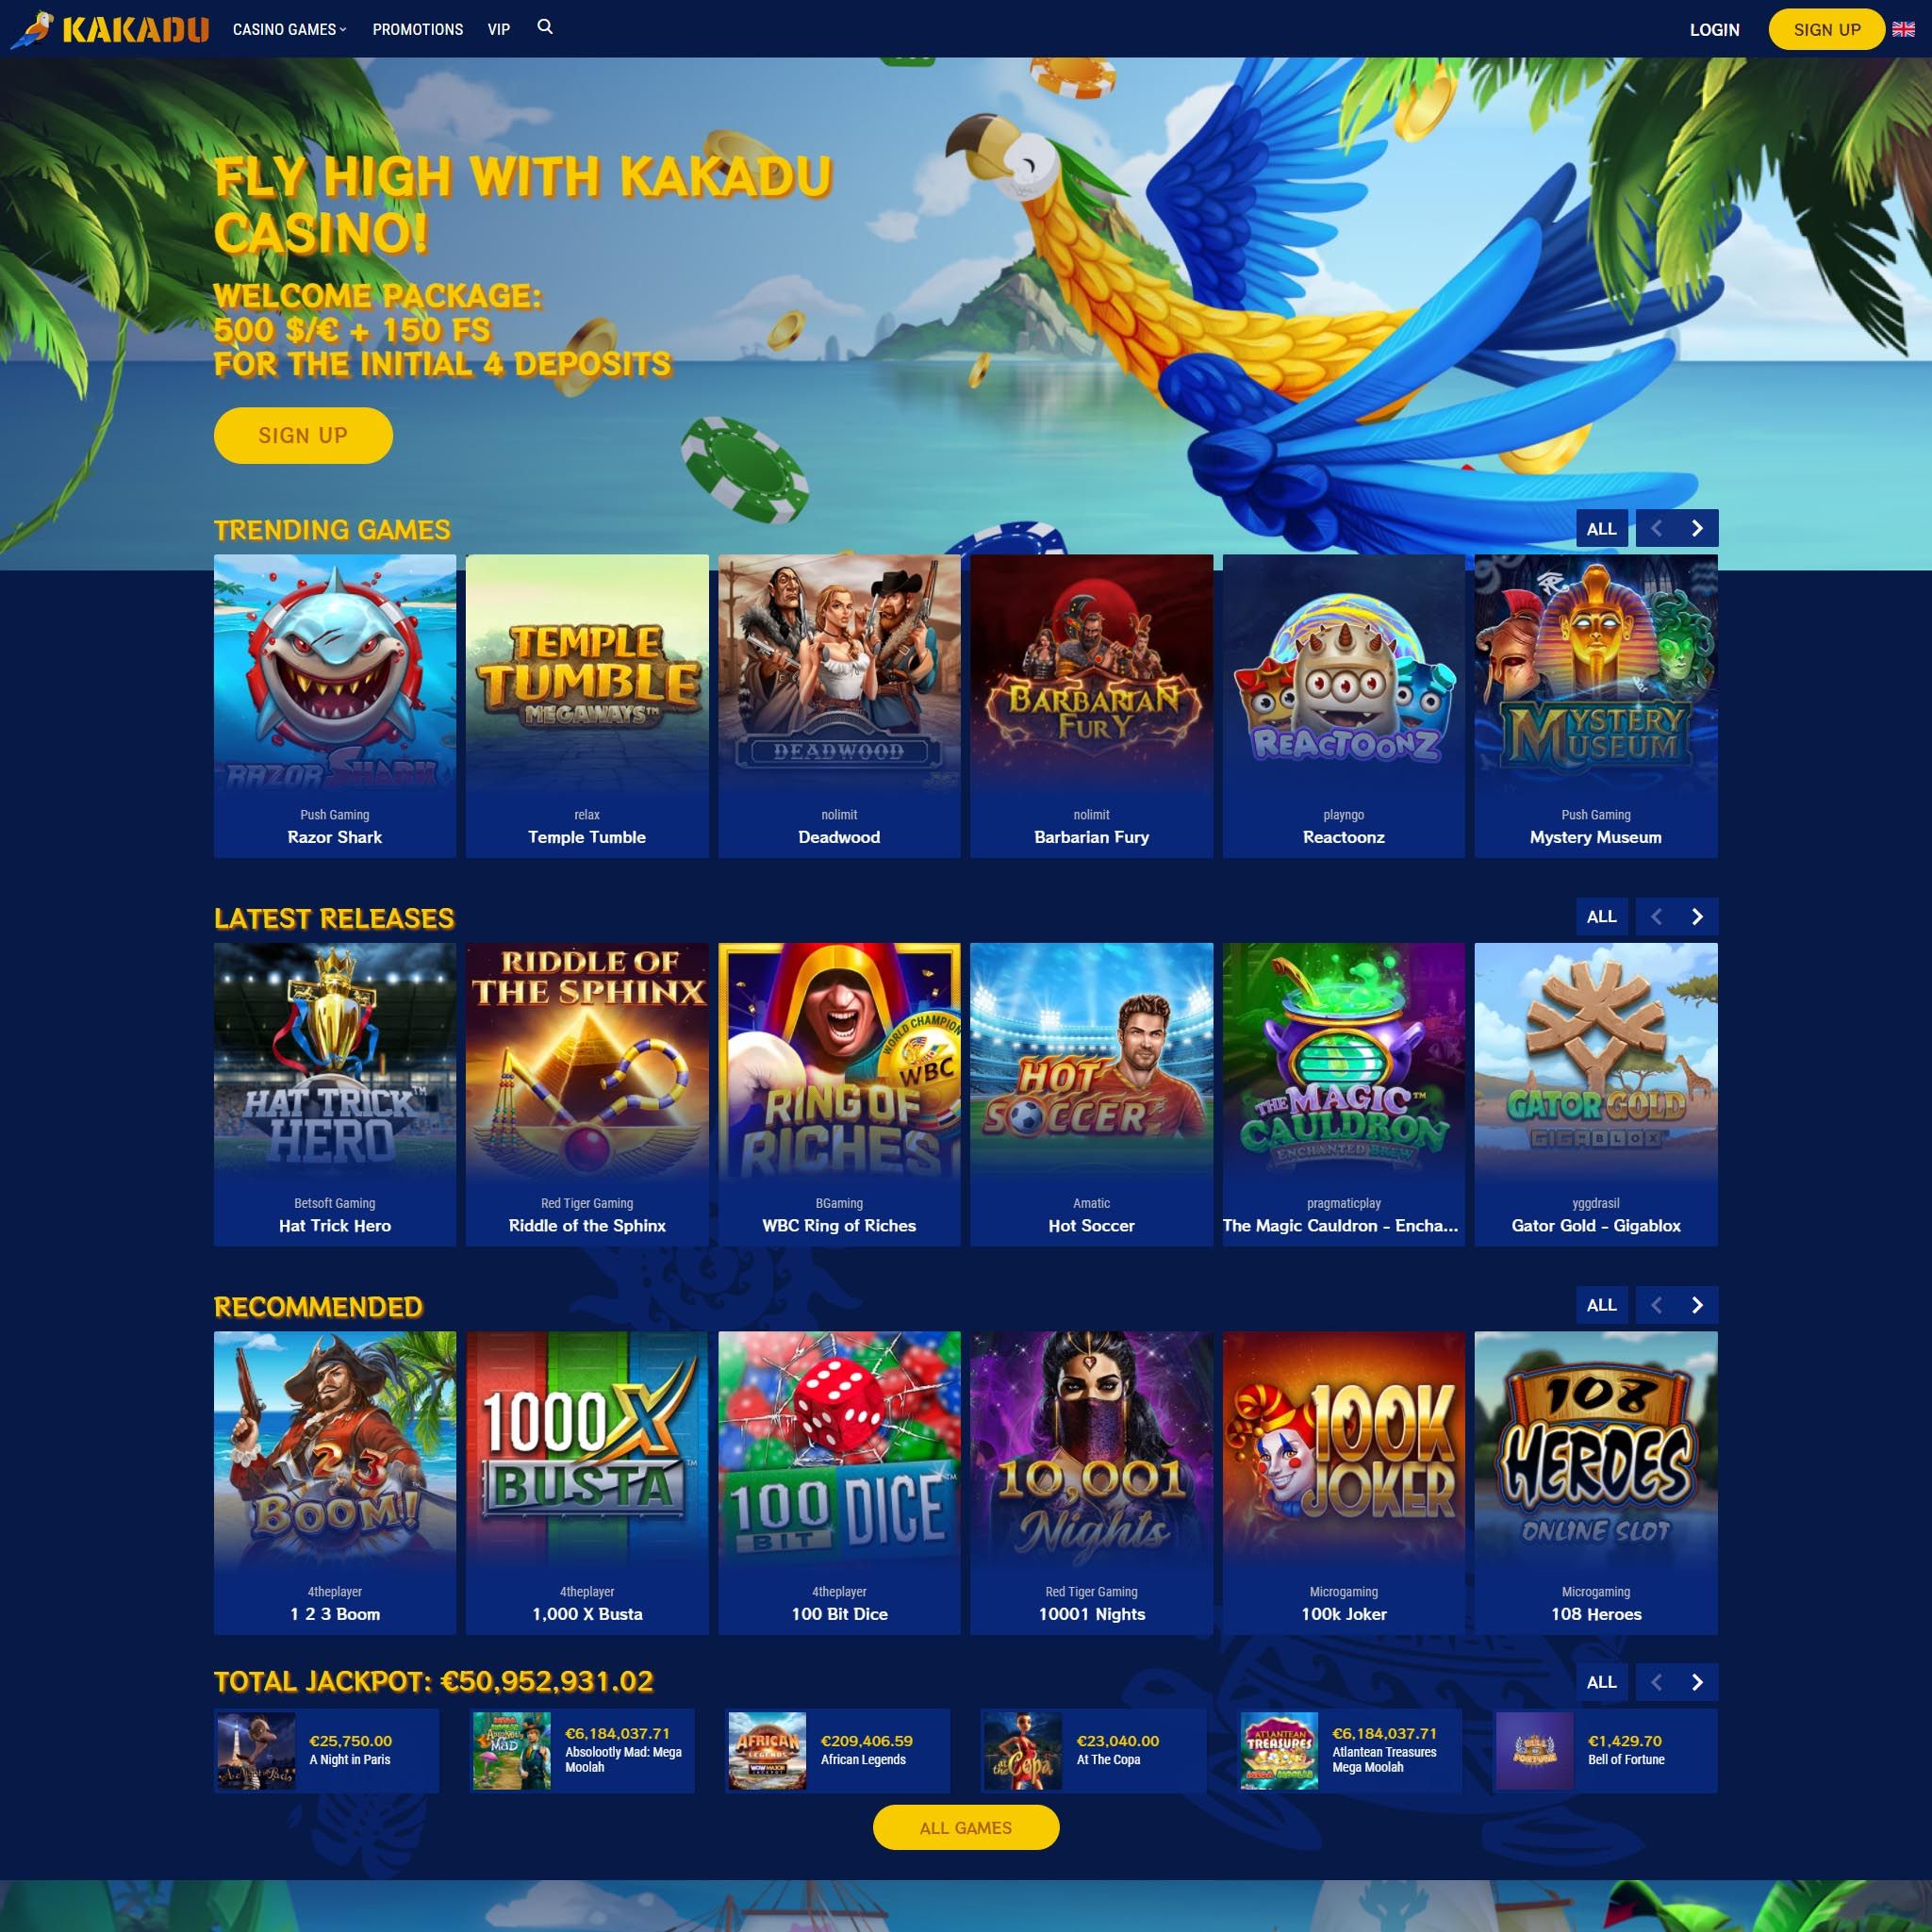 Kakadu Casino full games catalogue